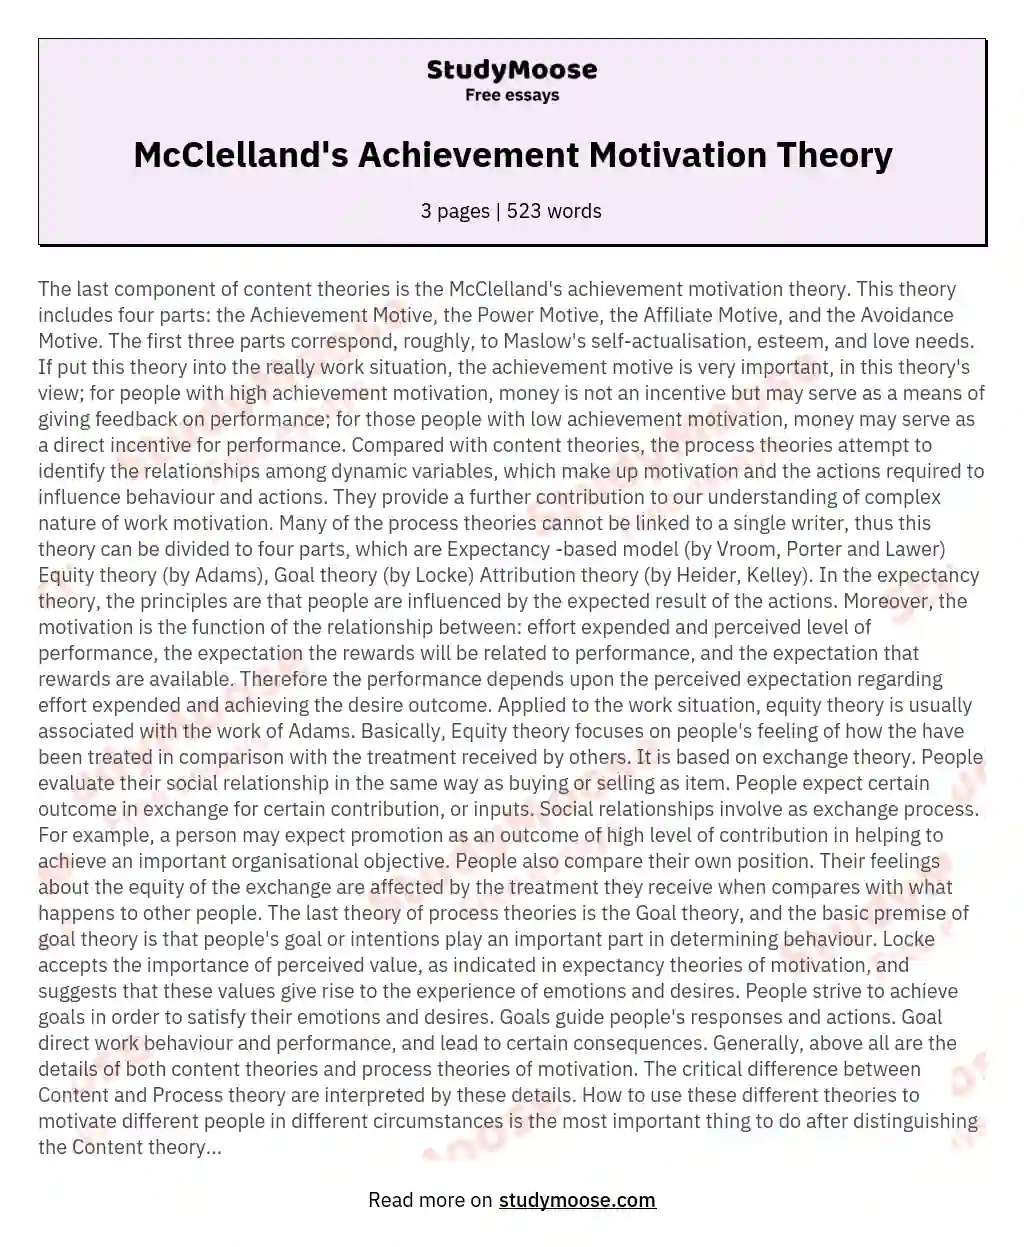 McClelland's Achievement Motivation Theory